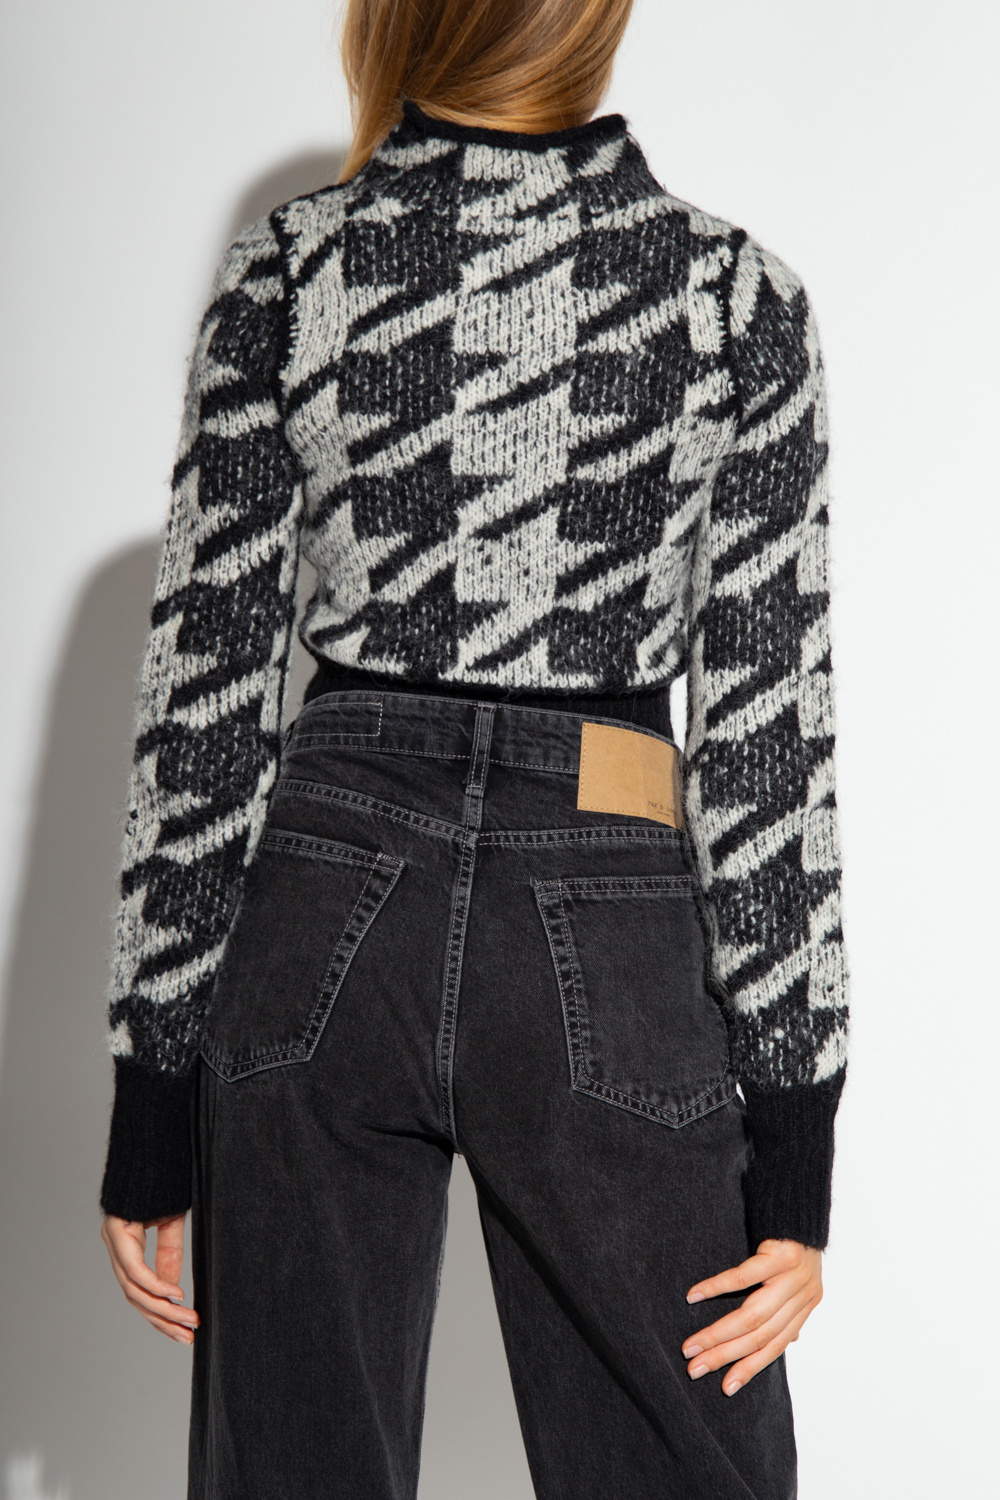 Rag & Bone  ‘Edith’ patterned Team sweater